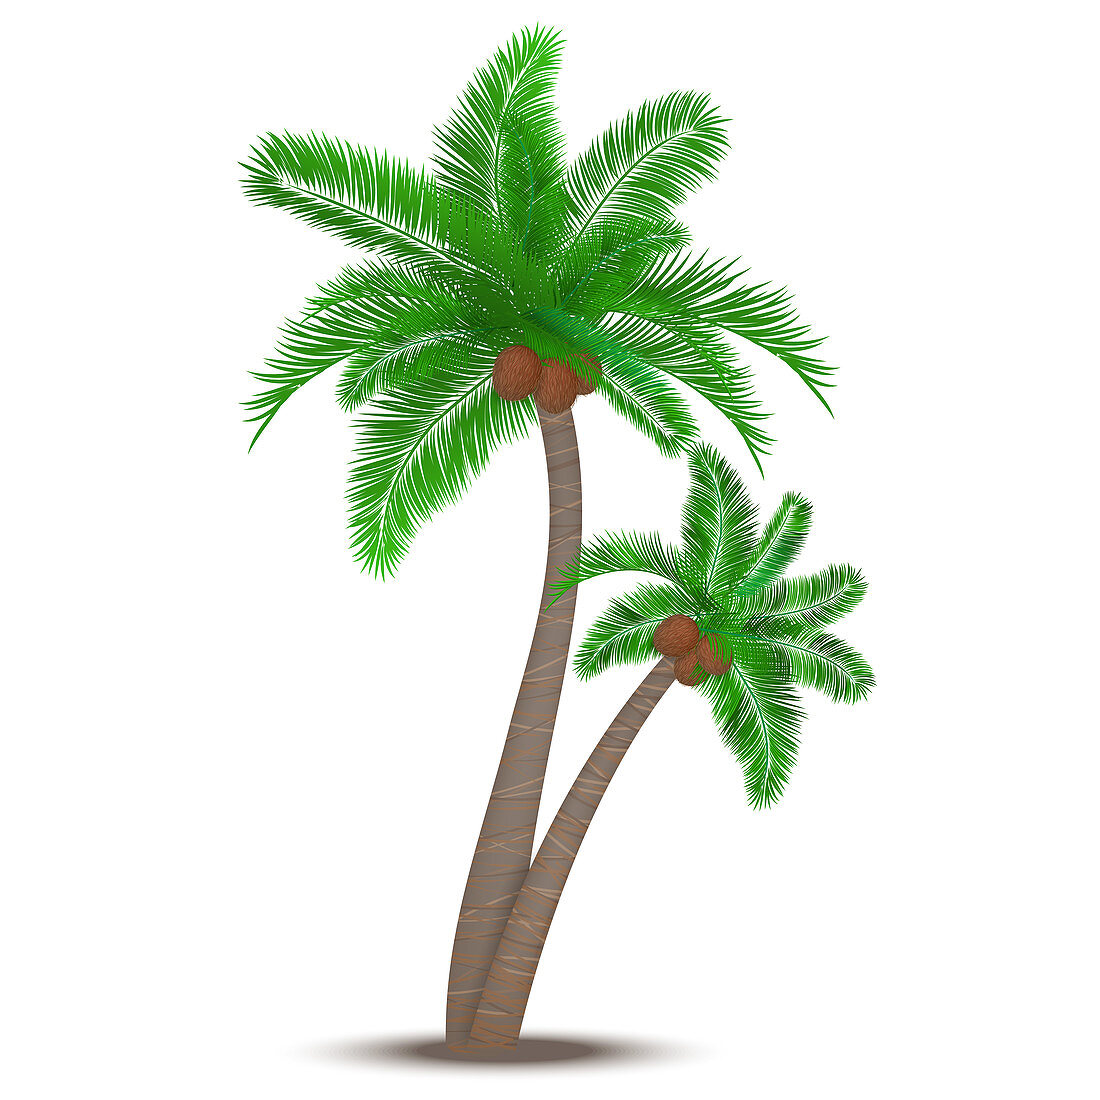 Tropical palm tree, illustration